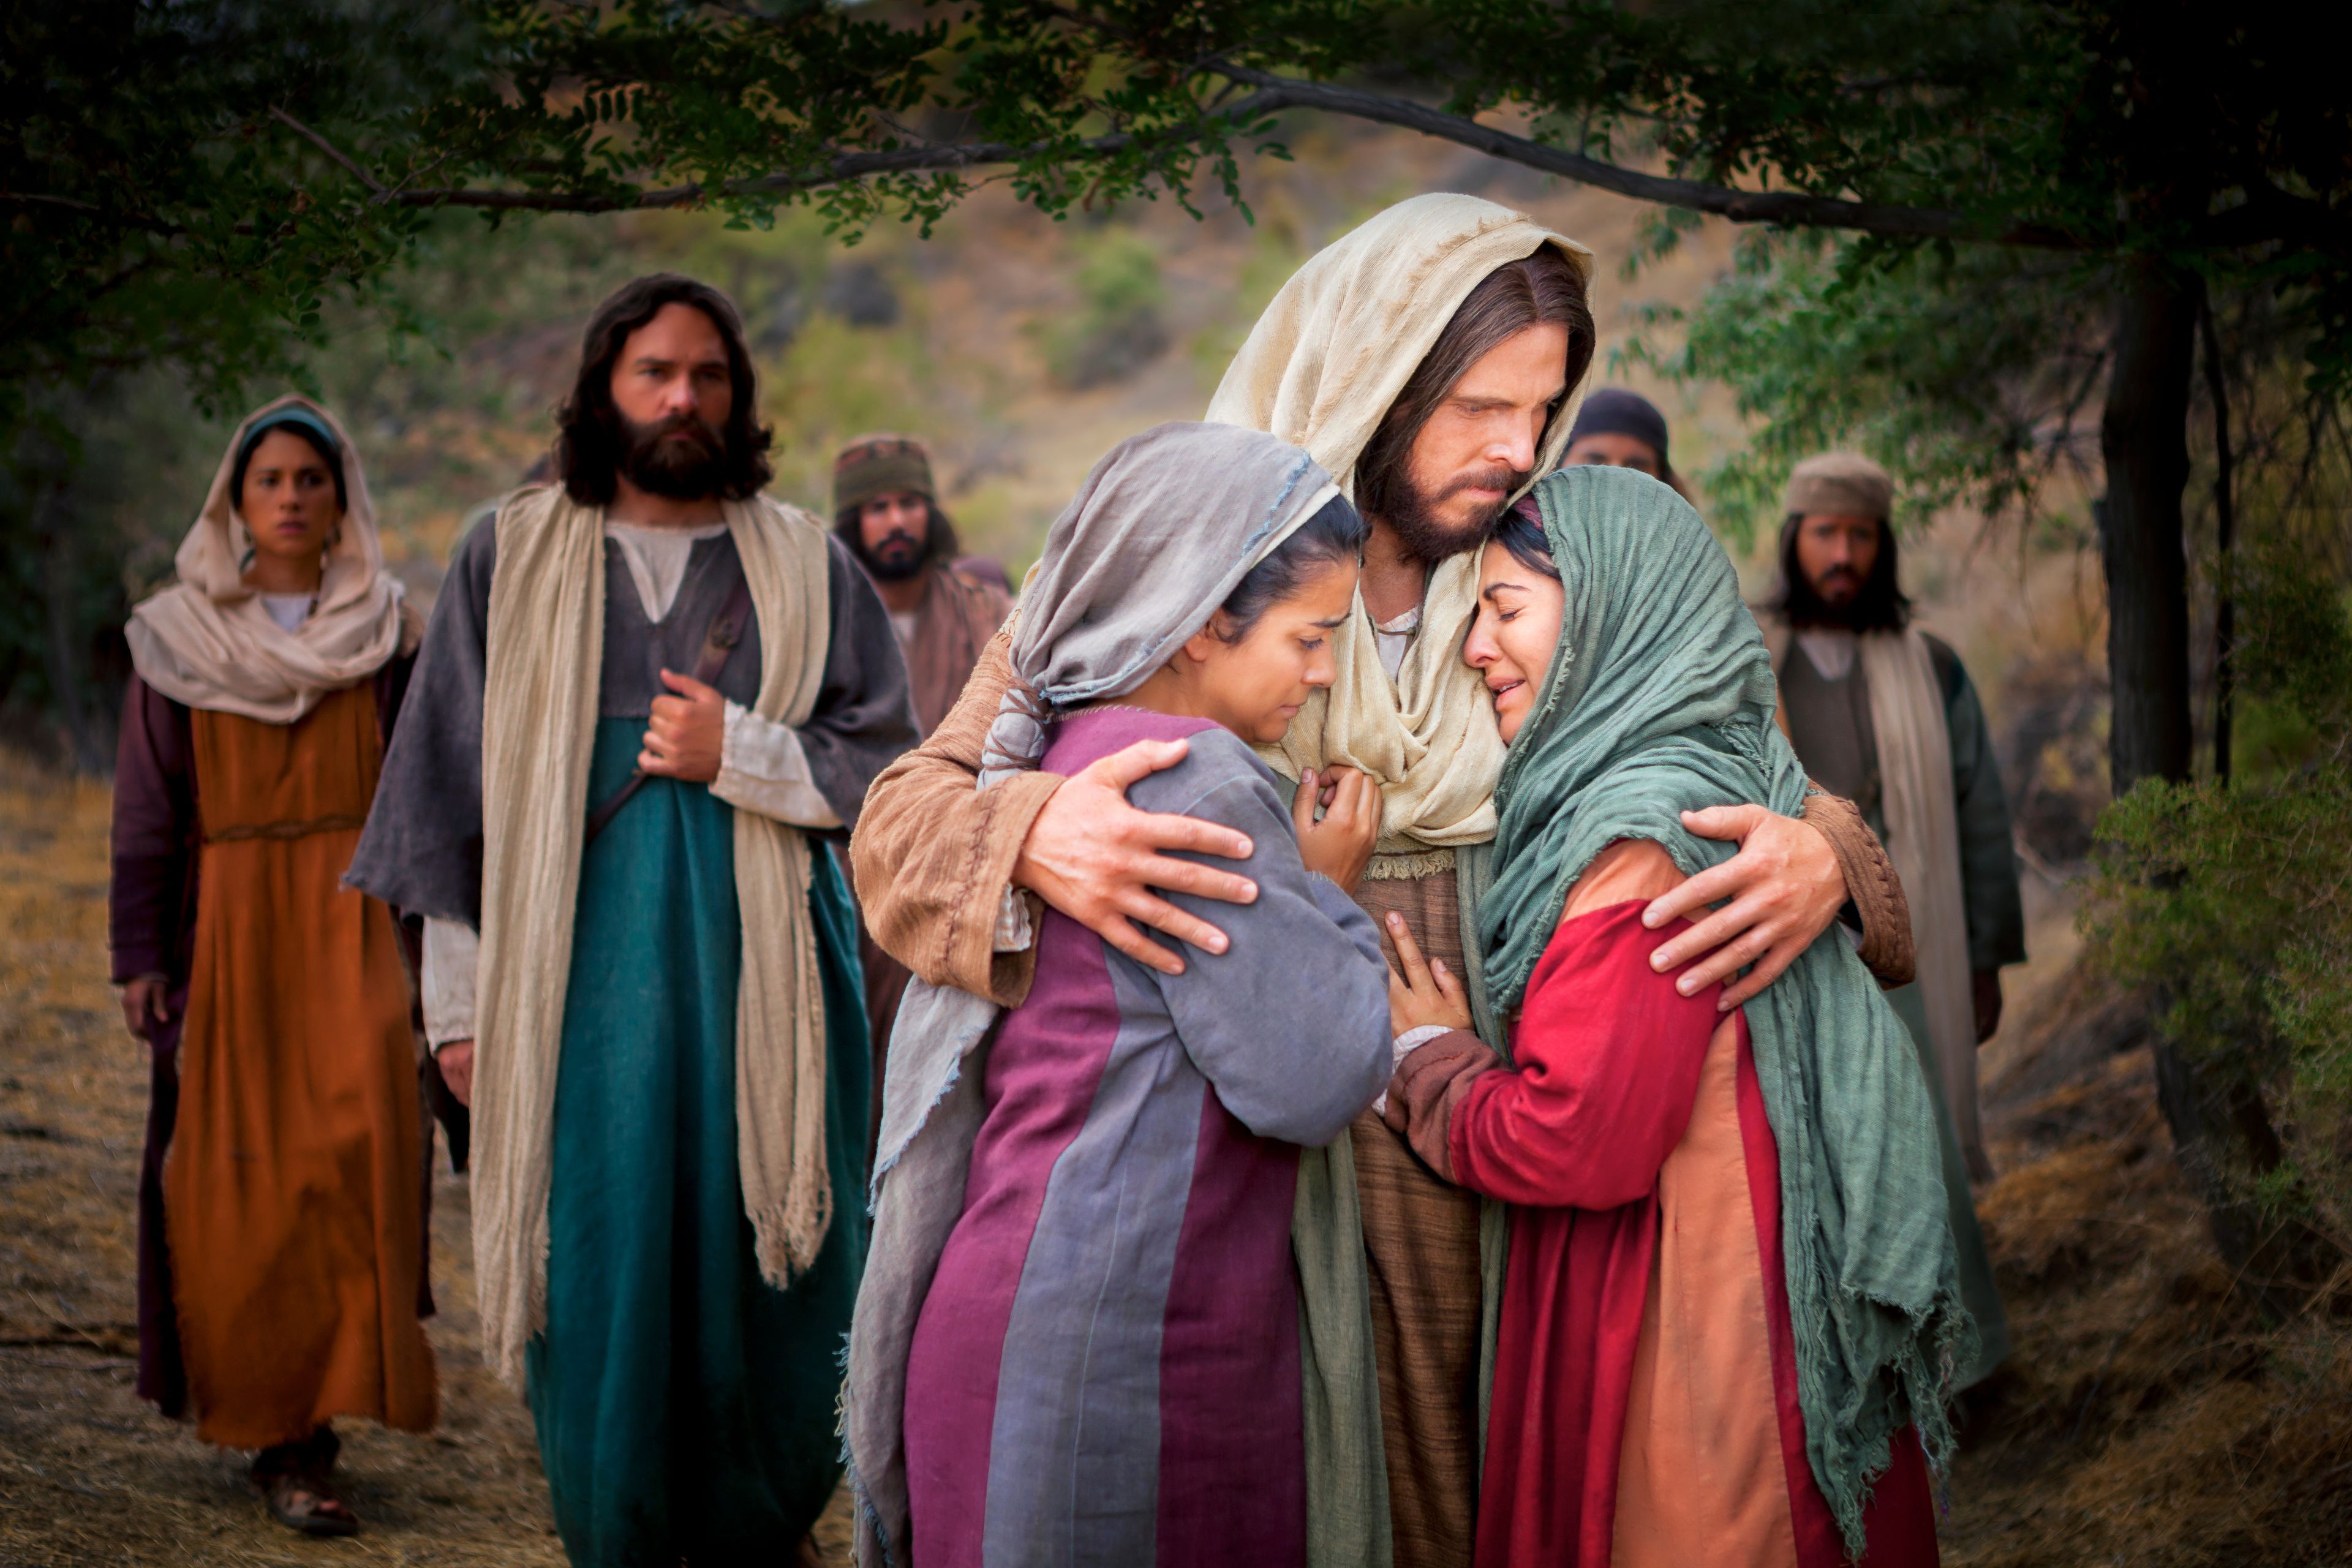 Christ embracing Mary and Martha.